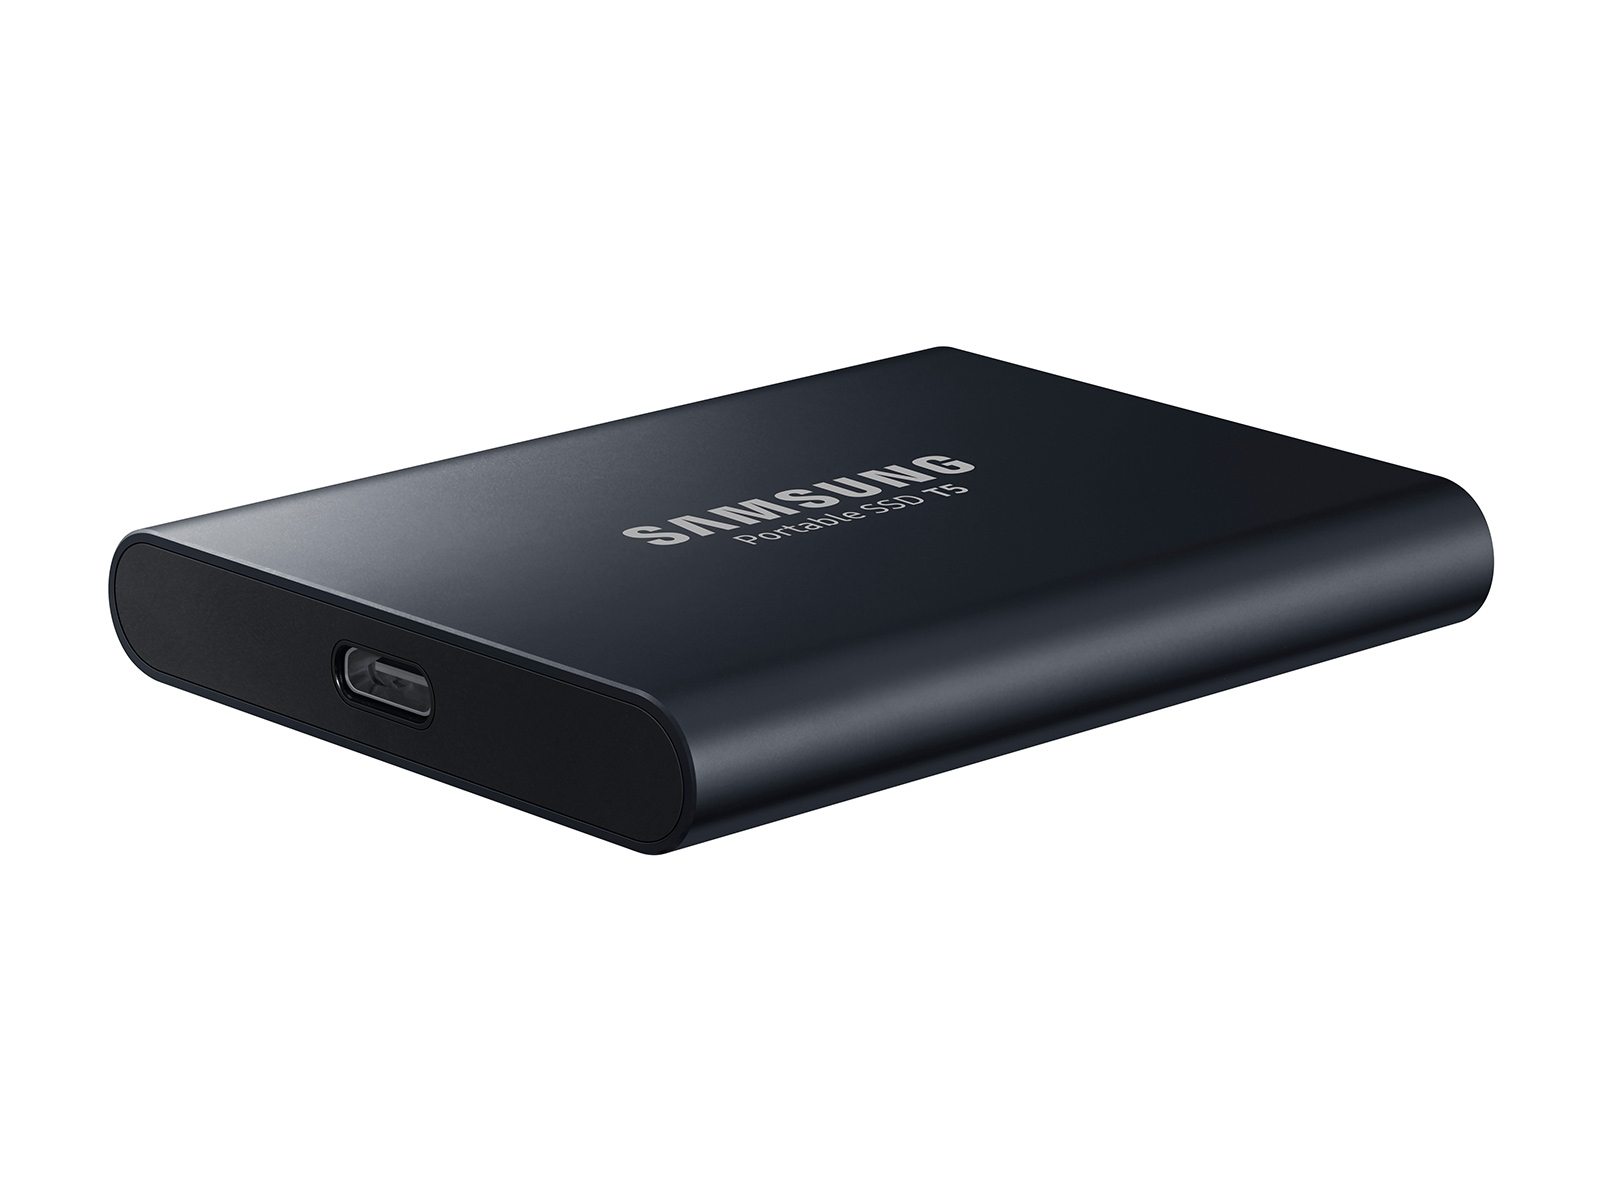 Portable SSD T5 1TB Memory & Storage - MU-PA1T0B/AM | Samsung US